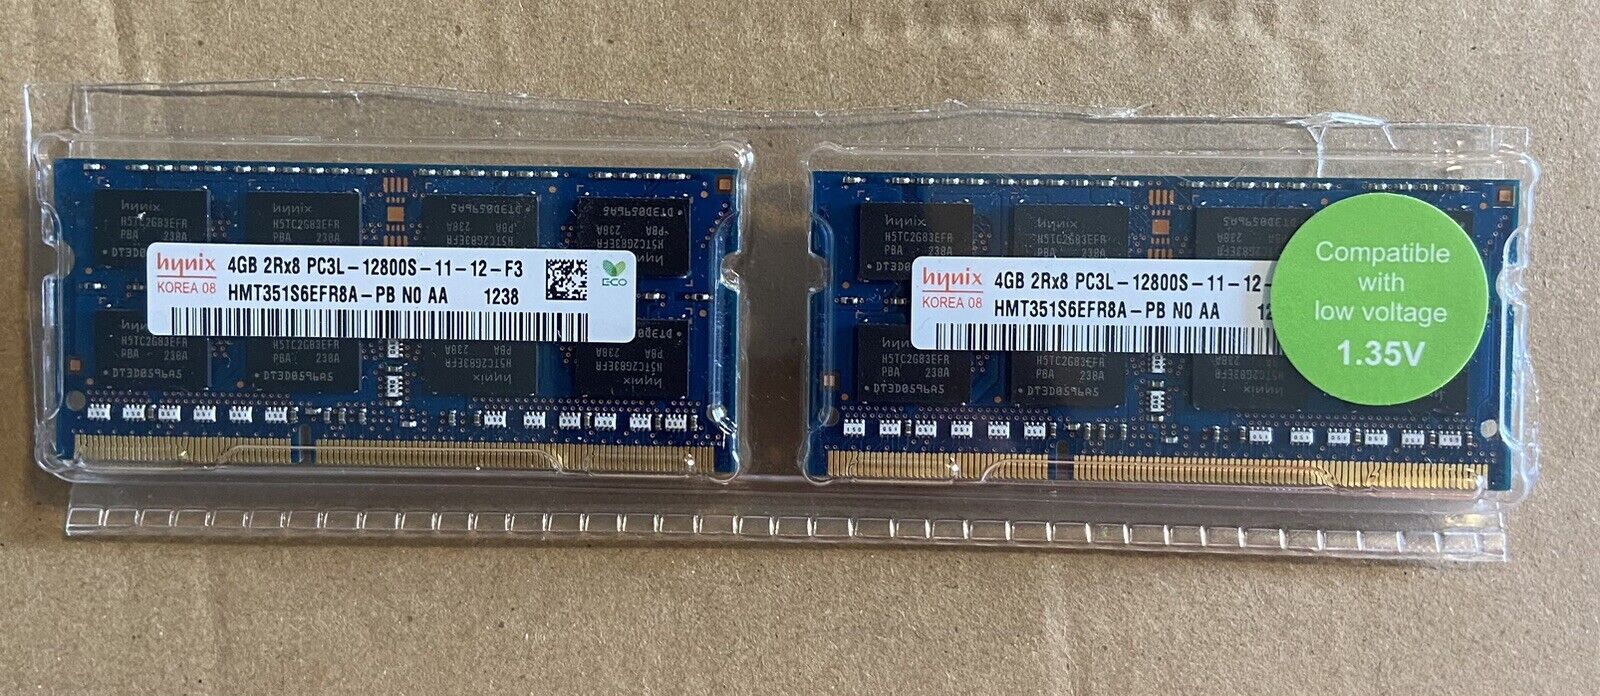 Pair Hynix 8GB (2x4GB) 2Rx8 PC3-12800s DDR3 RAM Modules HMT351S6CFR8C-H9 #3037